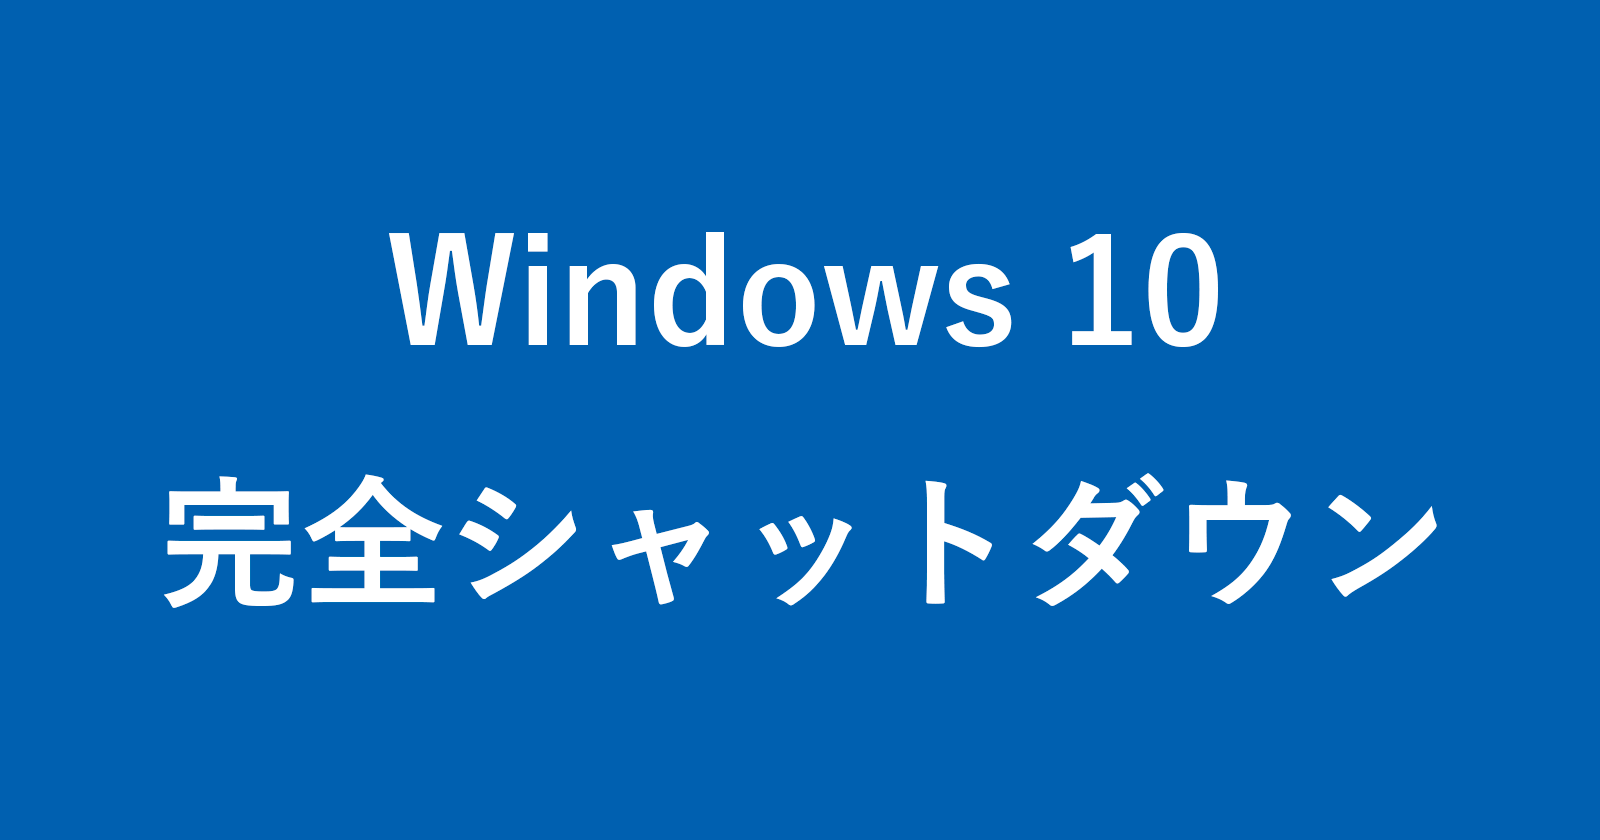 windows 10 full shutdown